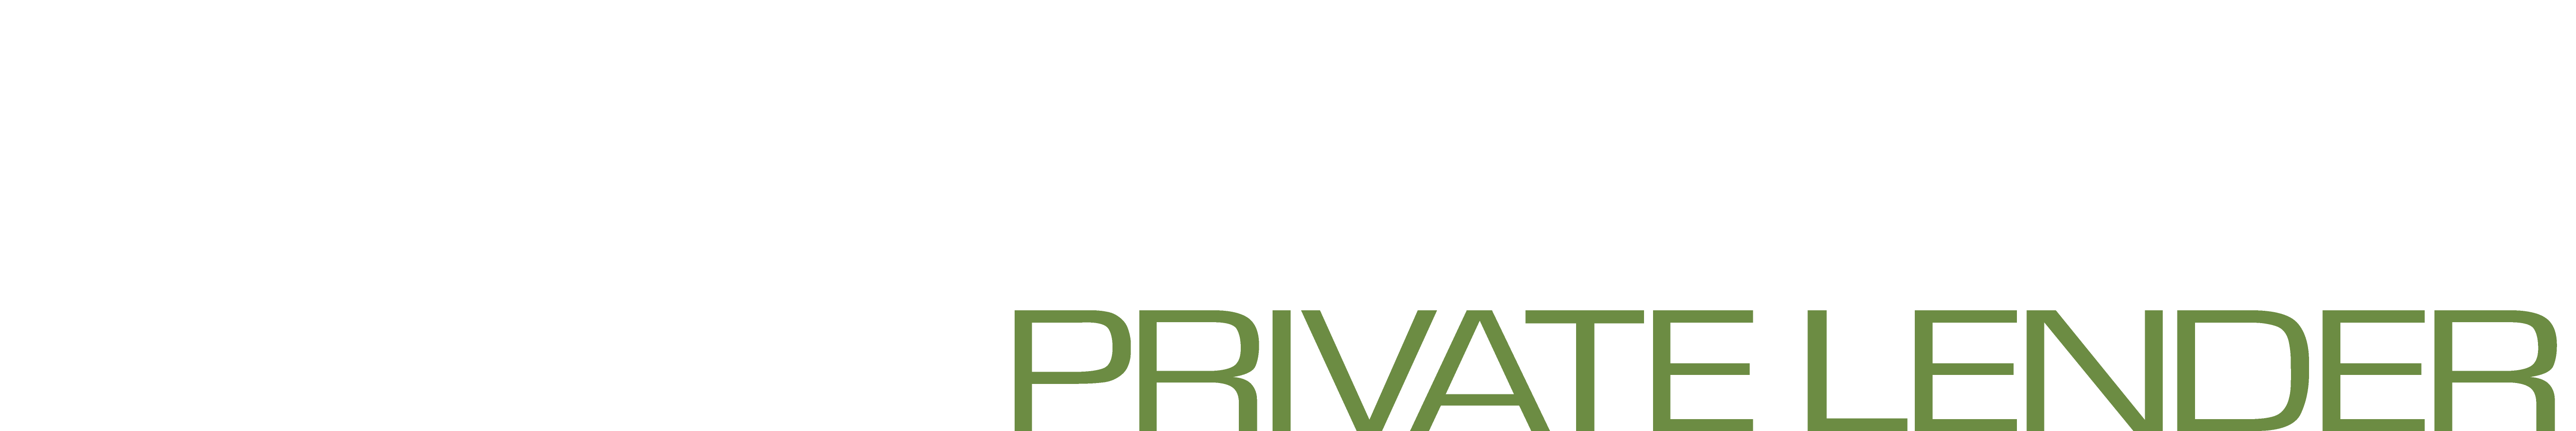 Norfolk Capital, Private Lender